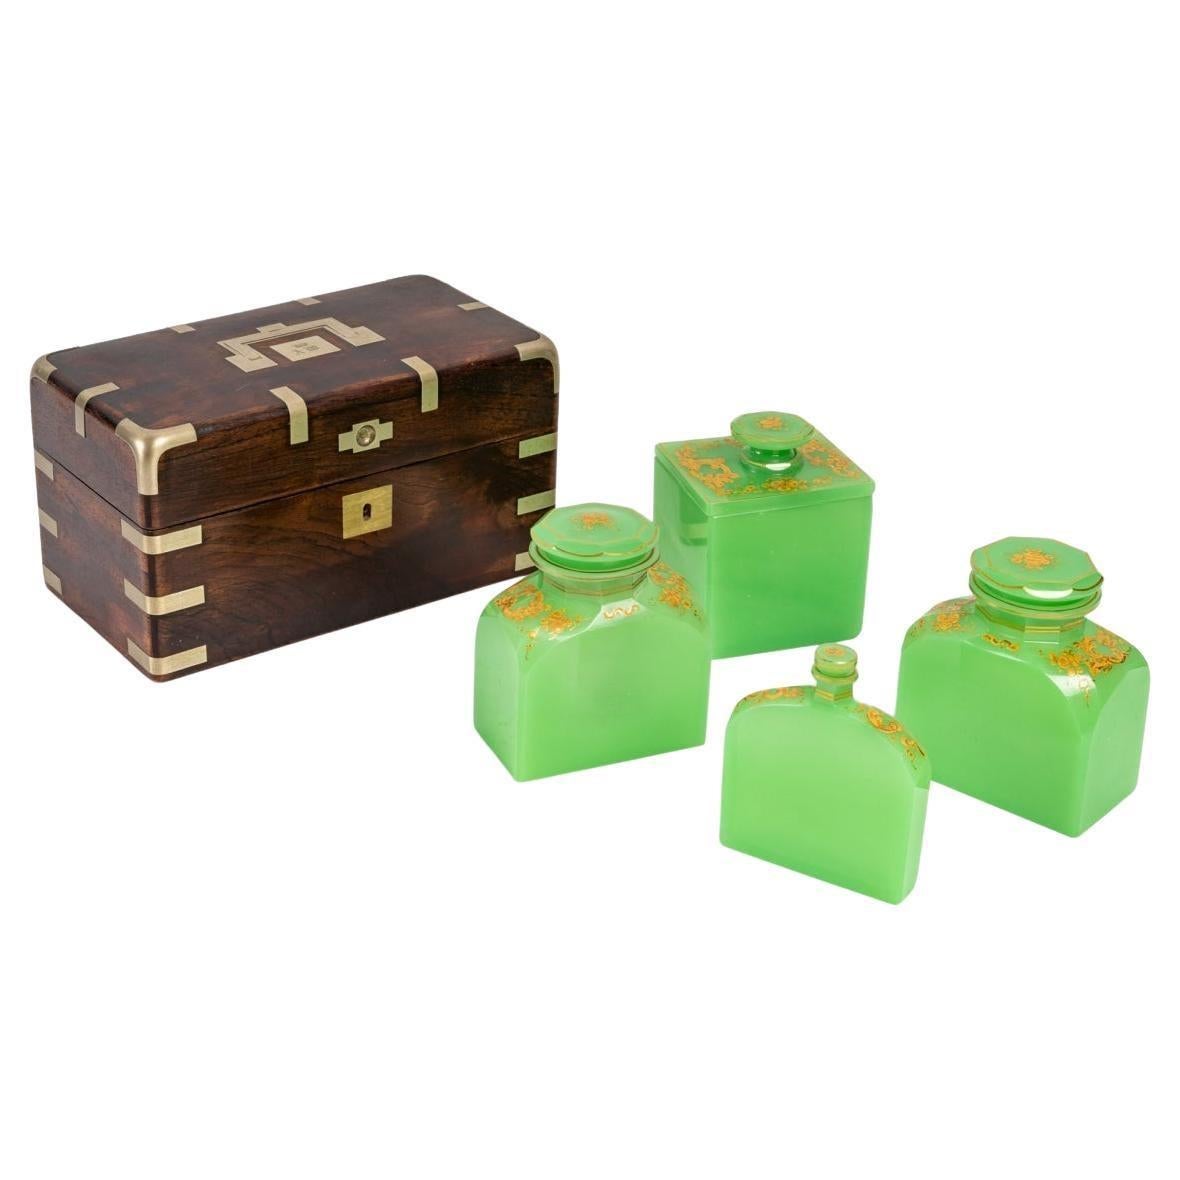 Wooden travel box with green opaline bottles.
19th Century.
Measures: H: 14cm, W: 26cm, D: 15cm.
Ref 2934.